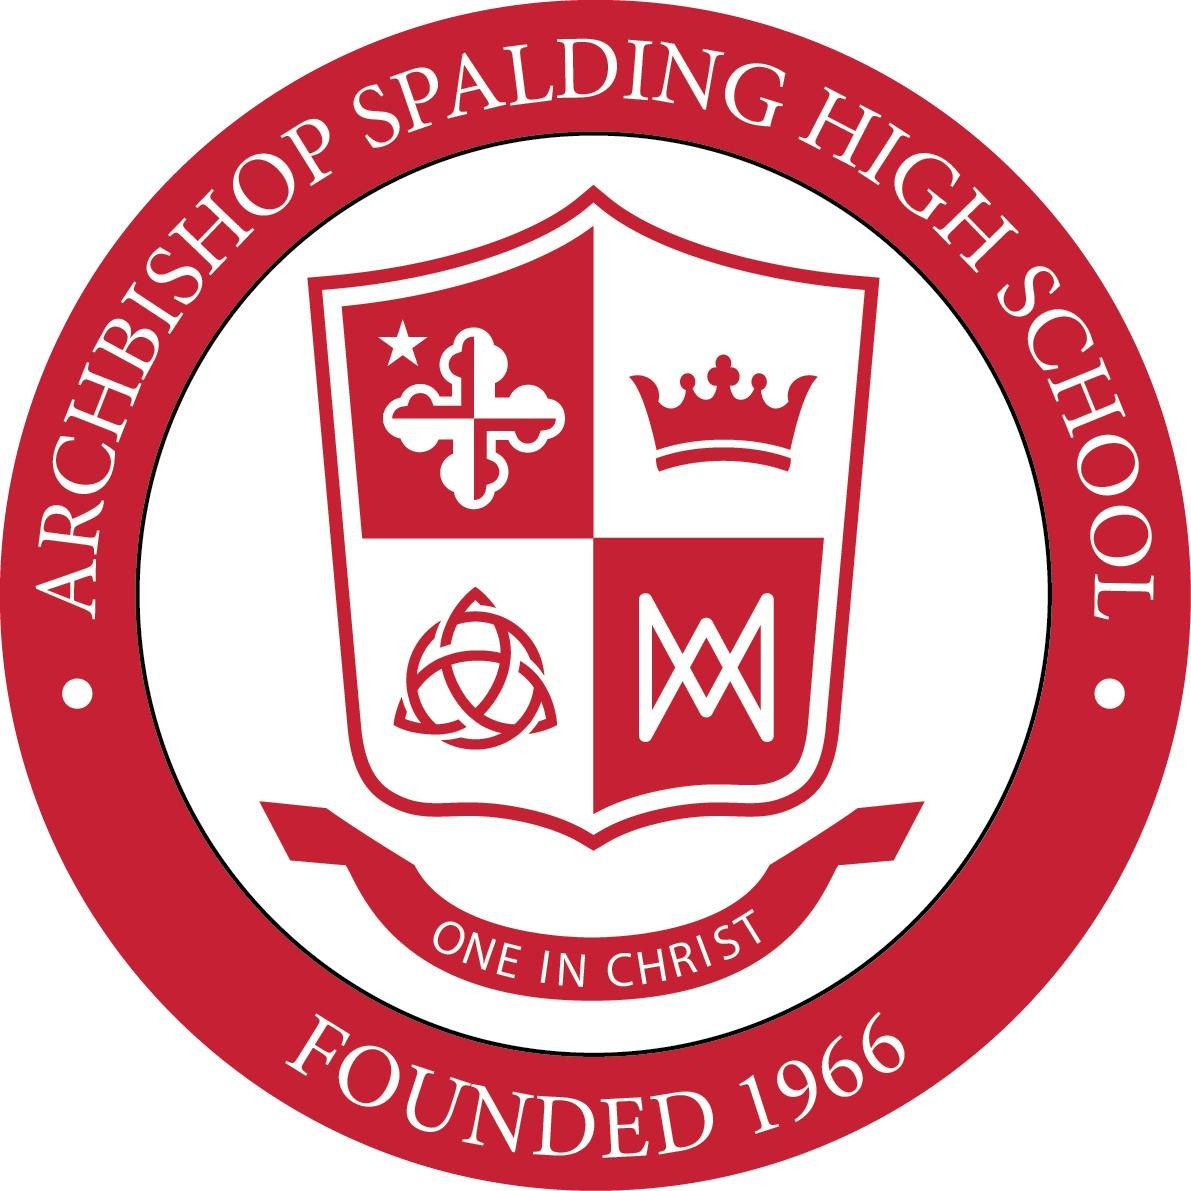 Archbishop Spalding High School